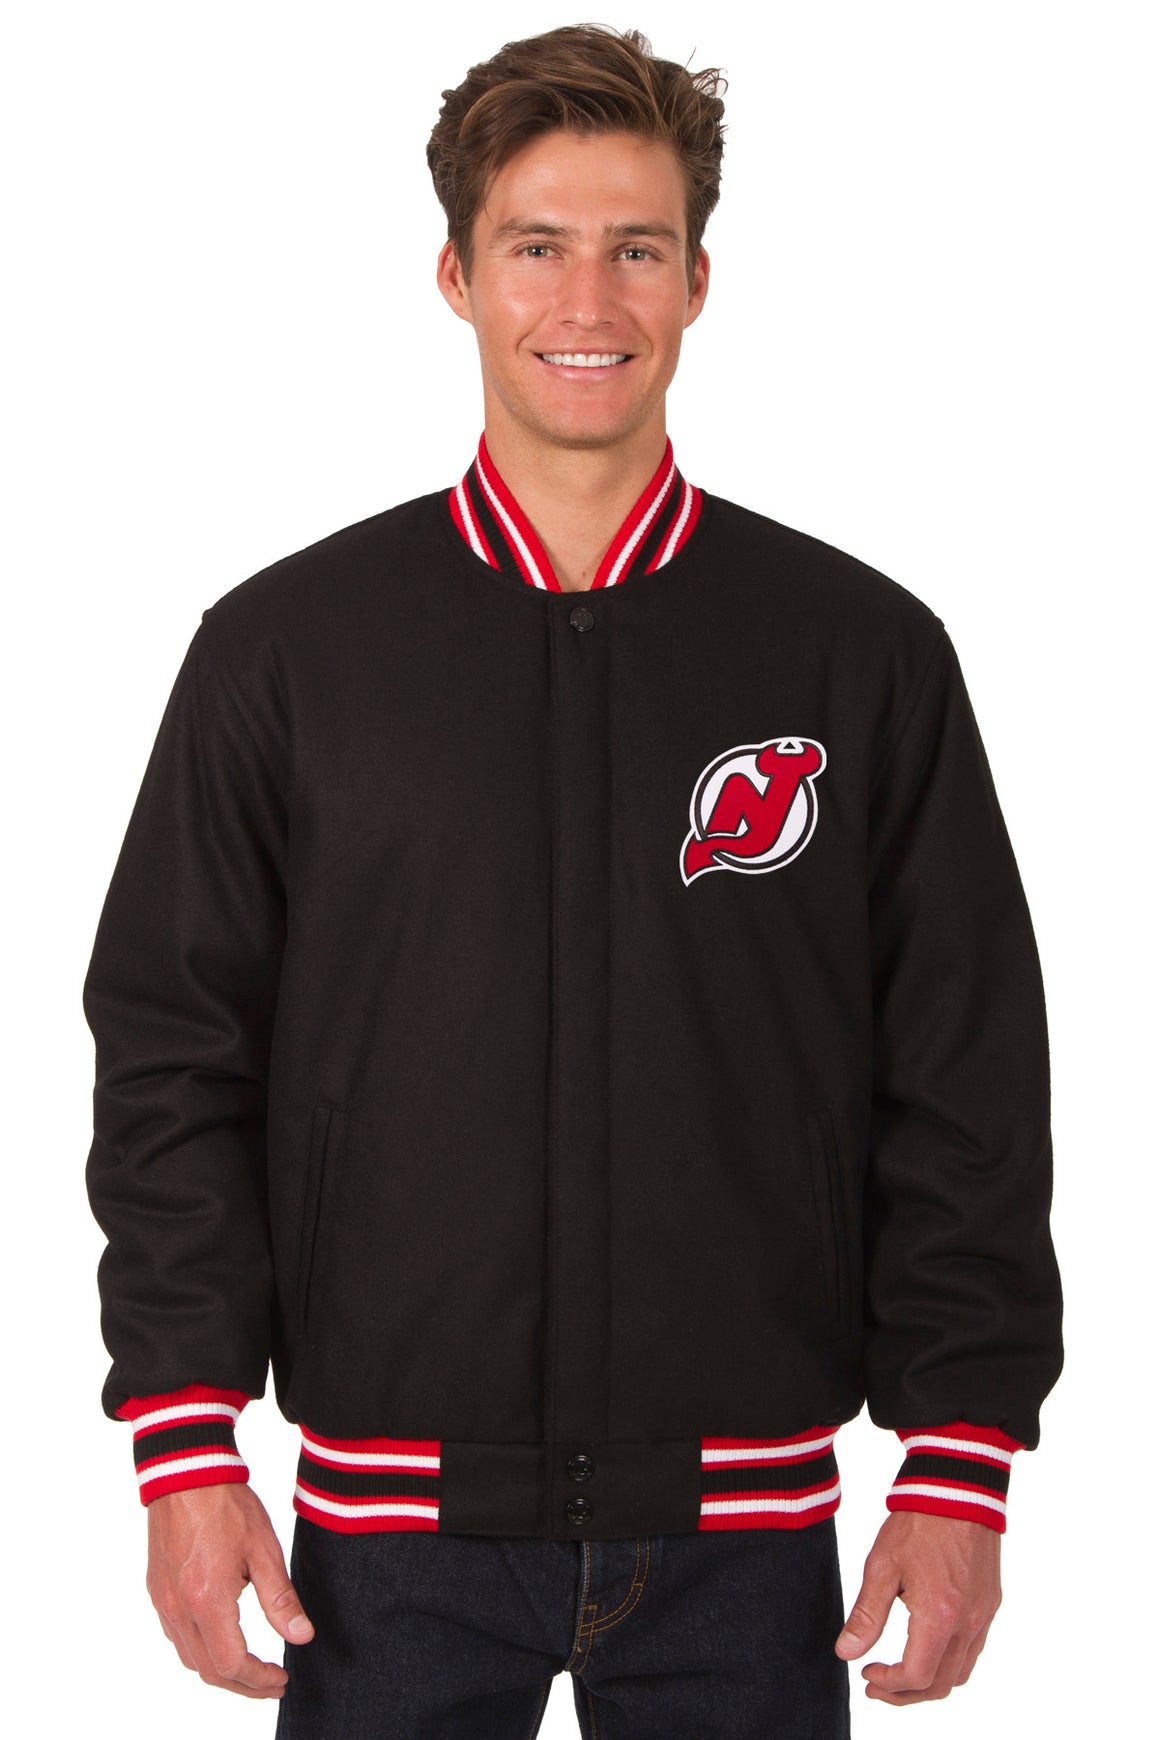 New Jersey Devils Reversible Wool Jacket - Black/Red | J.H. Sports Jackets